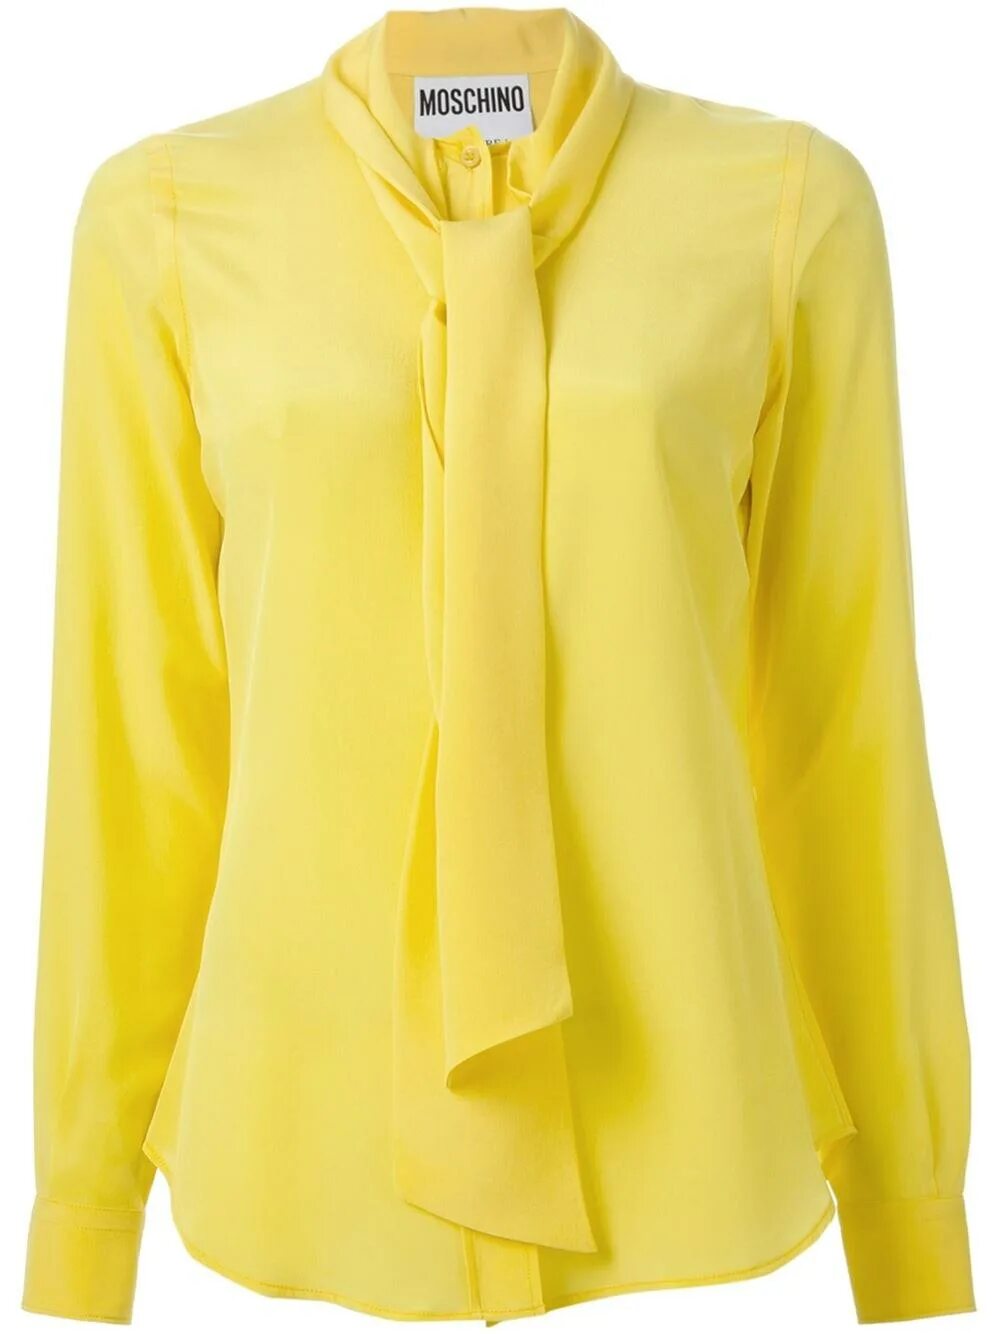 Где купить желтую. Желтая блузка. Желтая рубашка женская. Блузка женская желтая. Желтая блузка с длинным рукавом.